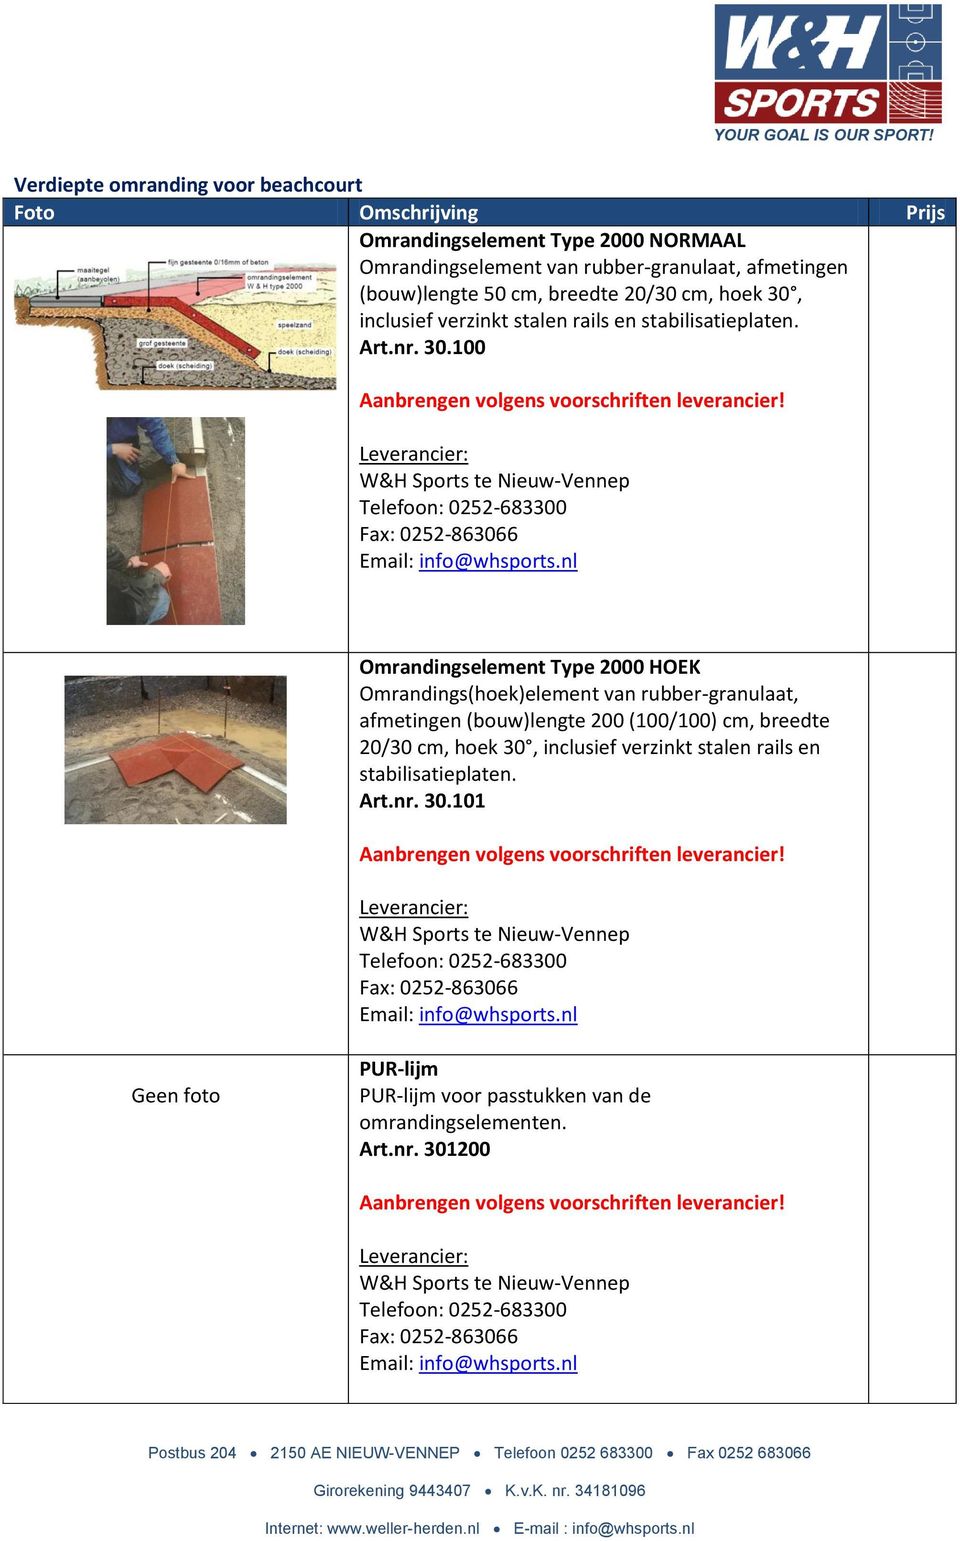 Omrandingselement Type 2000 HOEK Omrandings(hoek)element van rubber-granulaat, afmetingen (bouw)lengte 200 (100/100) cm, breedte 20/30 cm, hoek 30, inclusief verzinkt